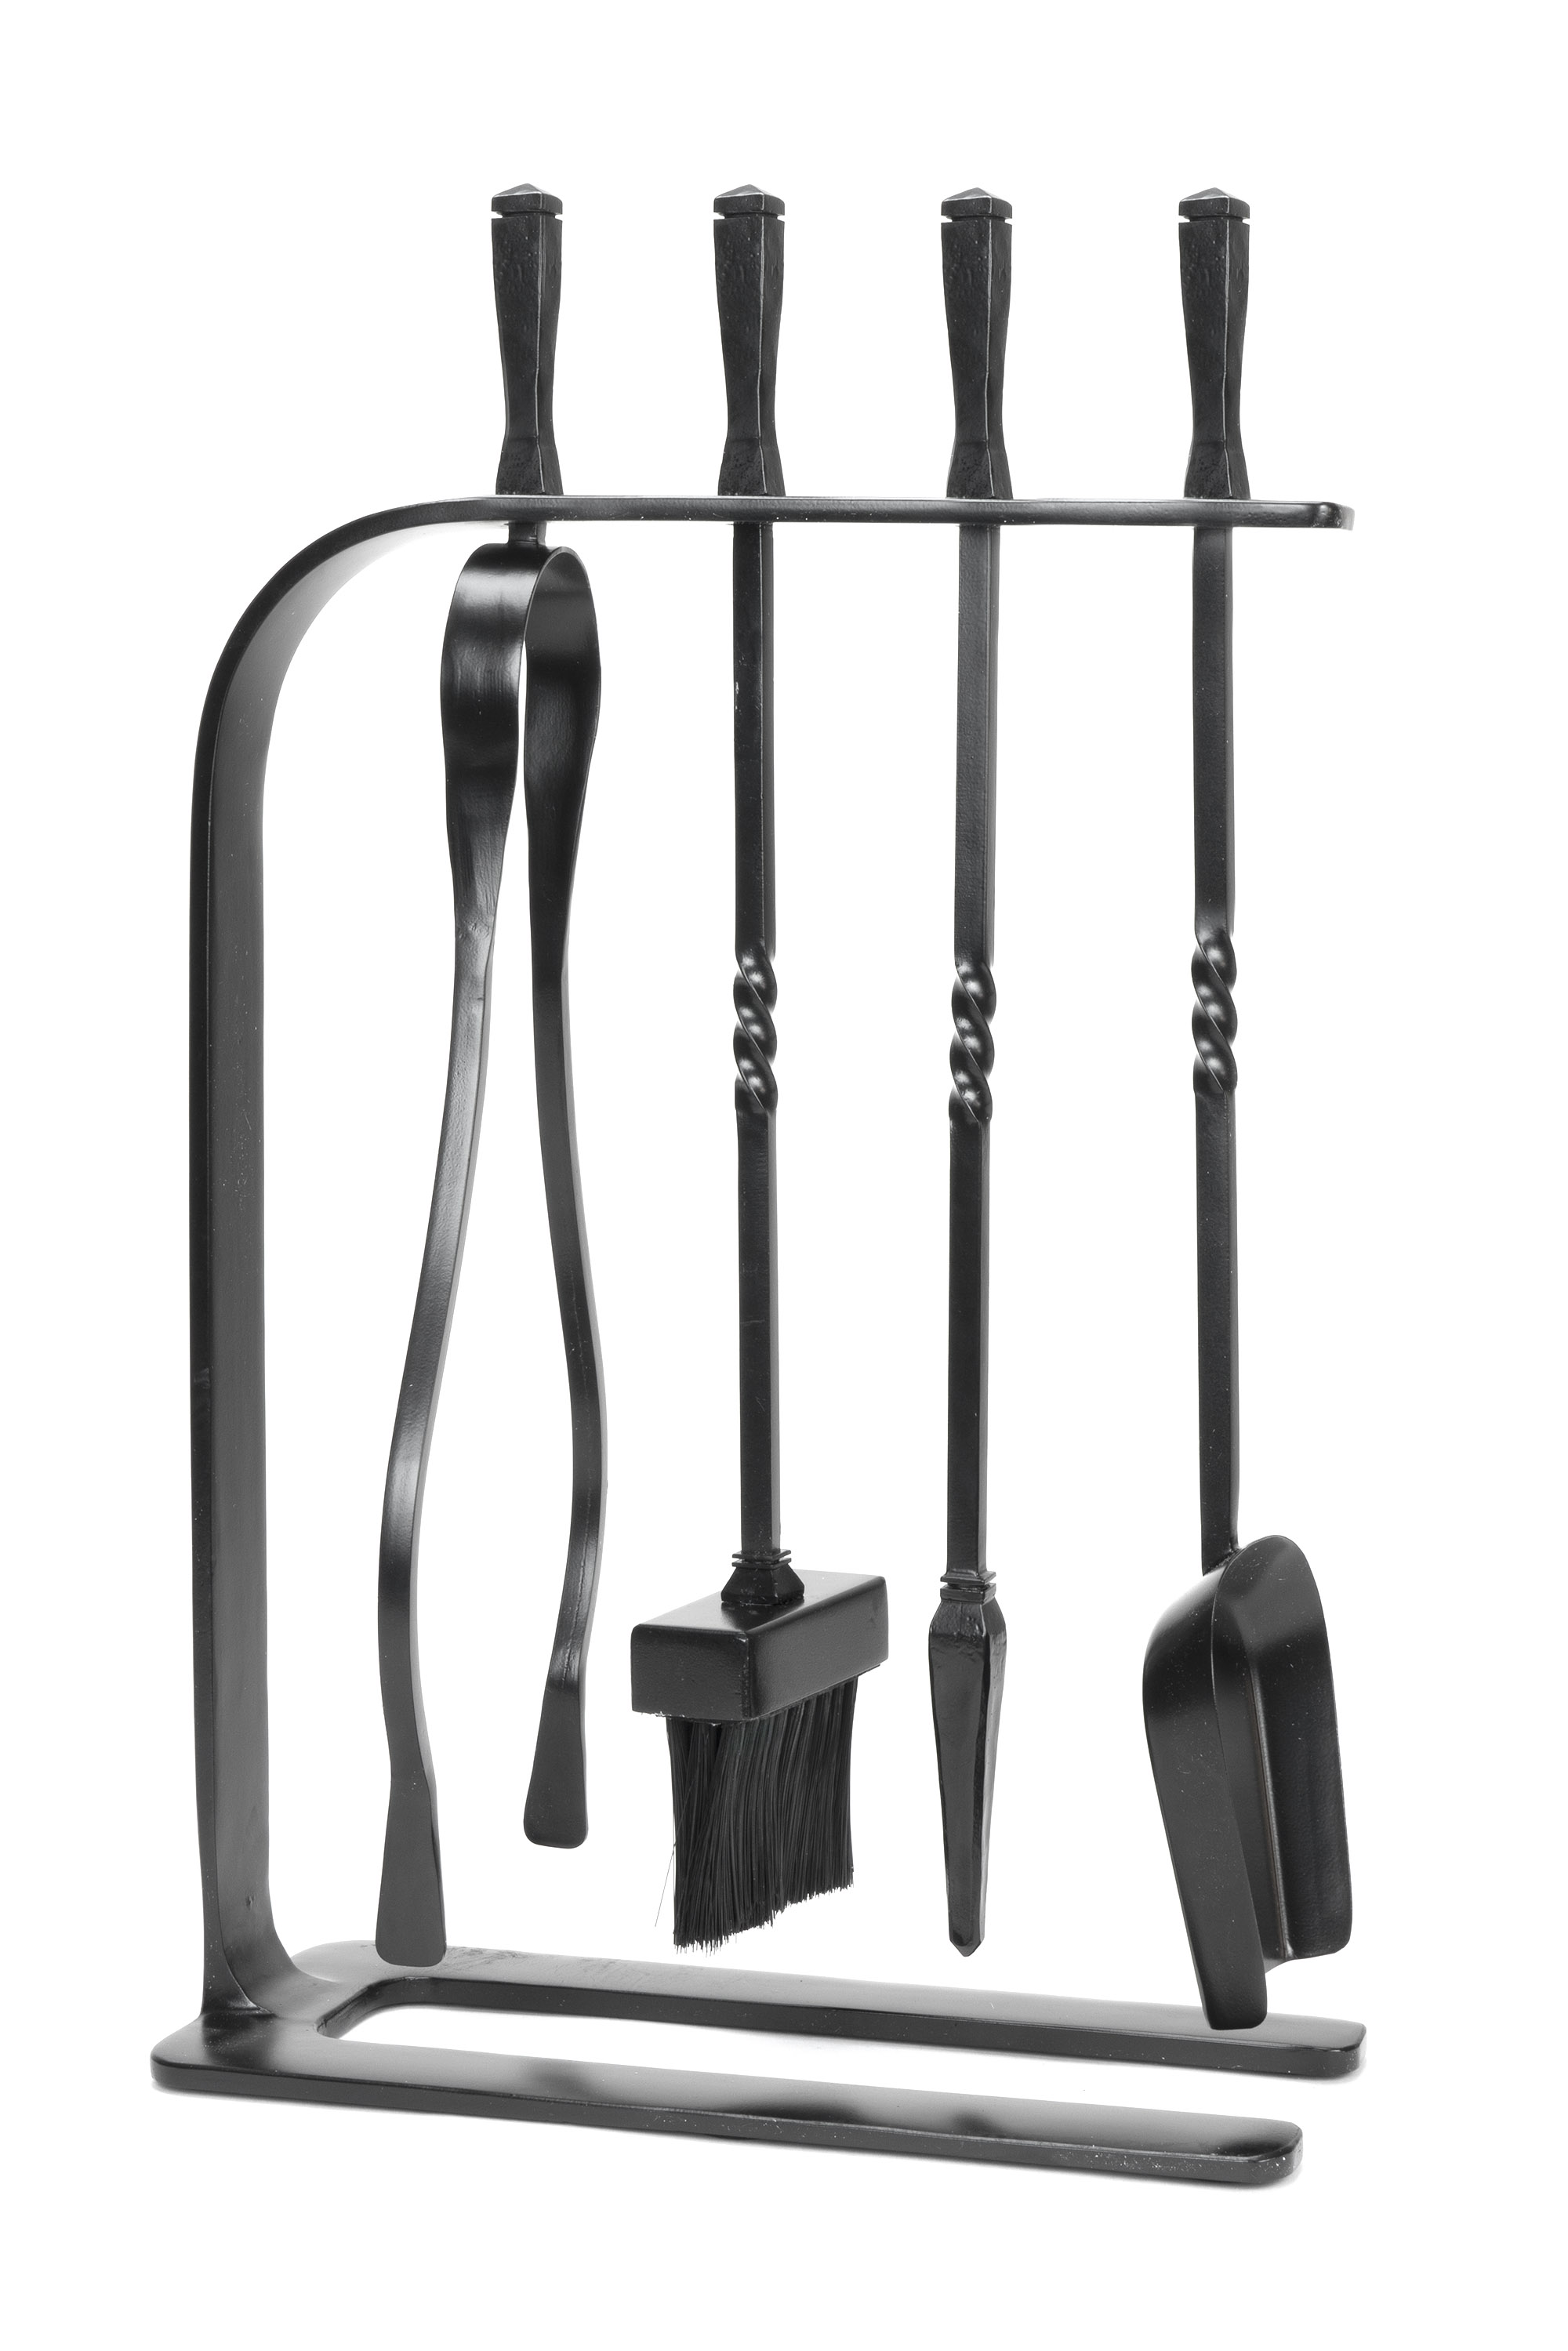 Matt Black Arc Companion Set - Avon Tools